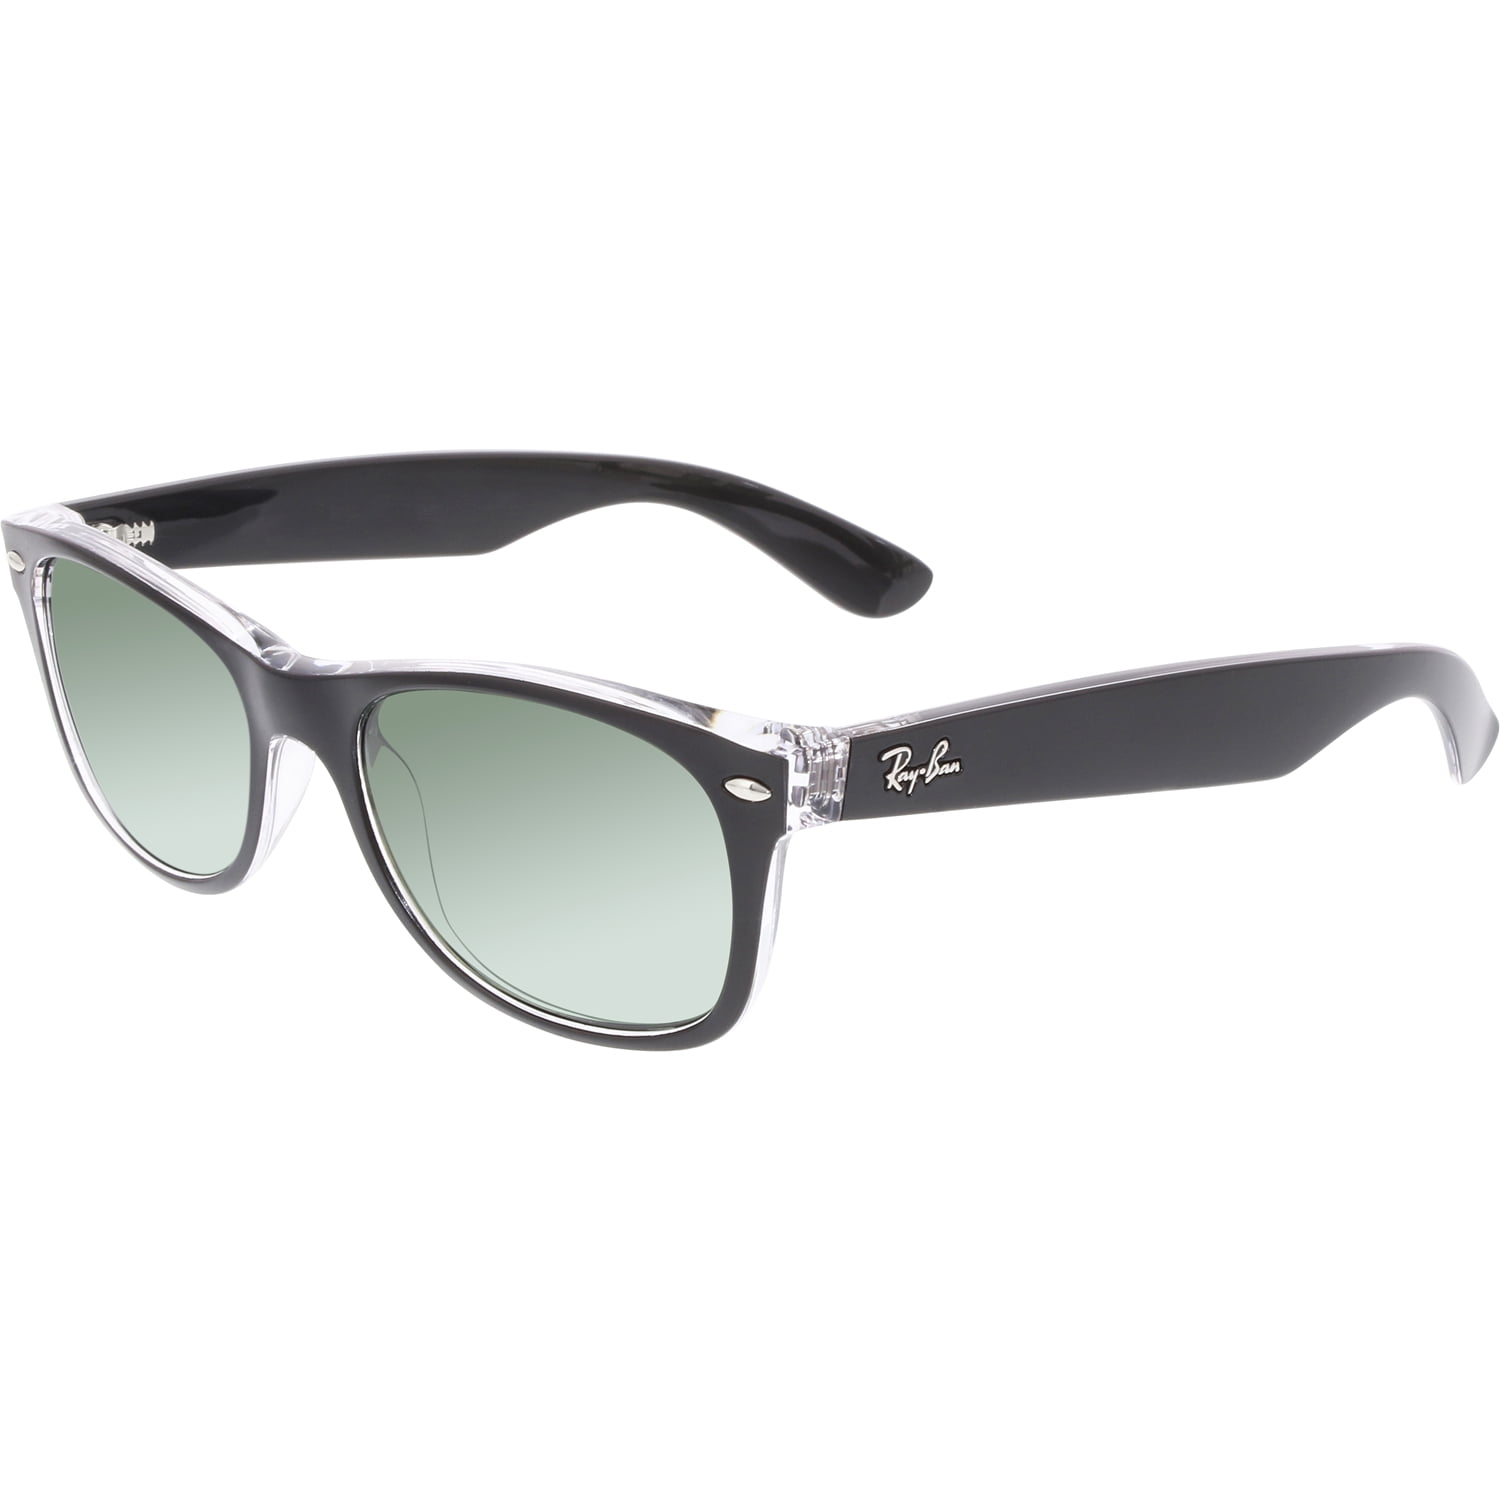 Ray Ban New Wayfarer Classic Polarized Green Sunglasses RB2132 605258 52 -  